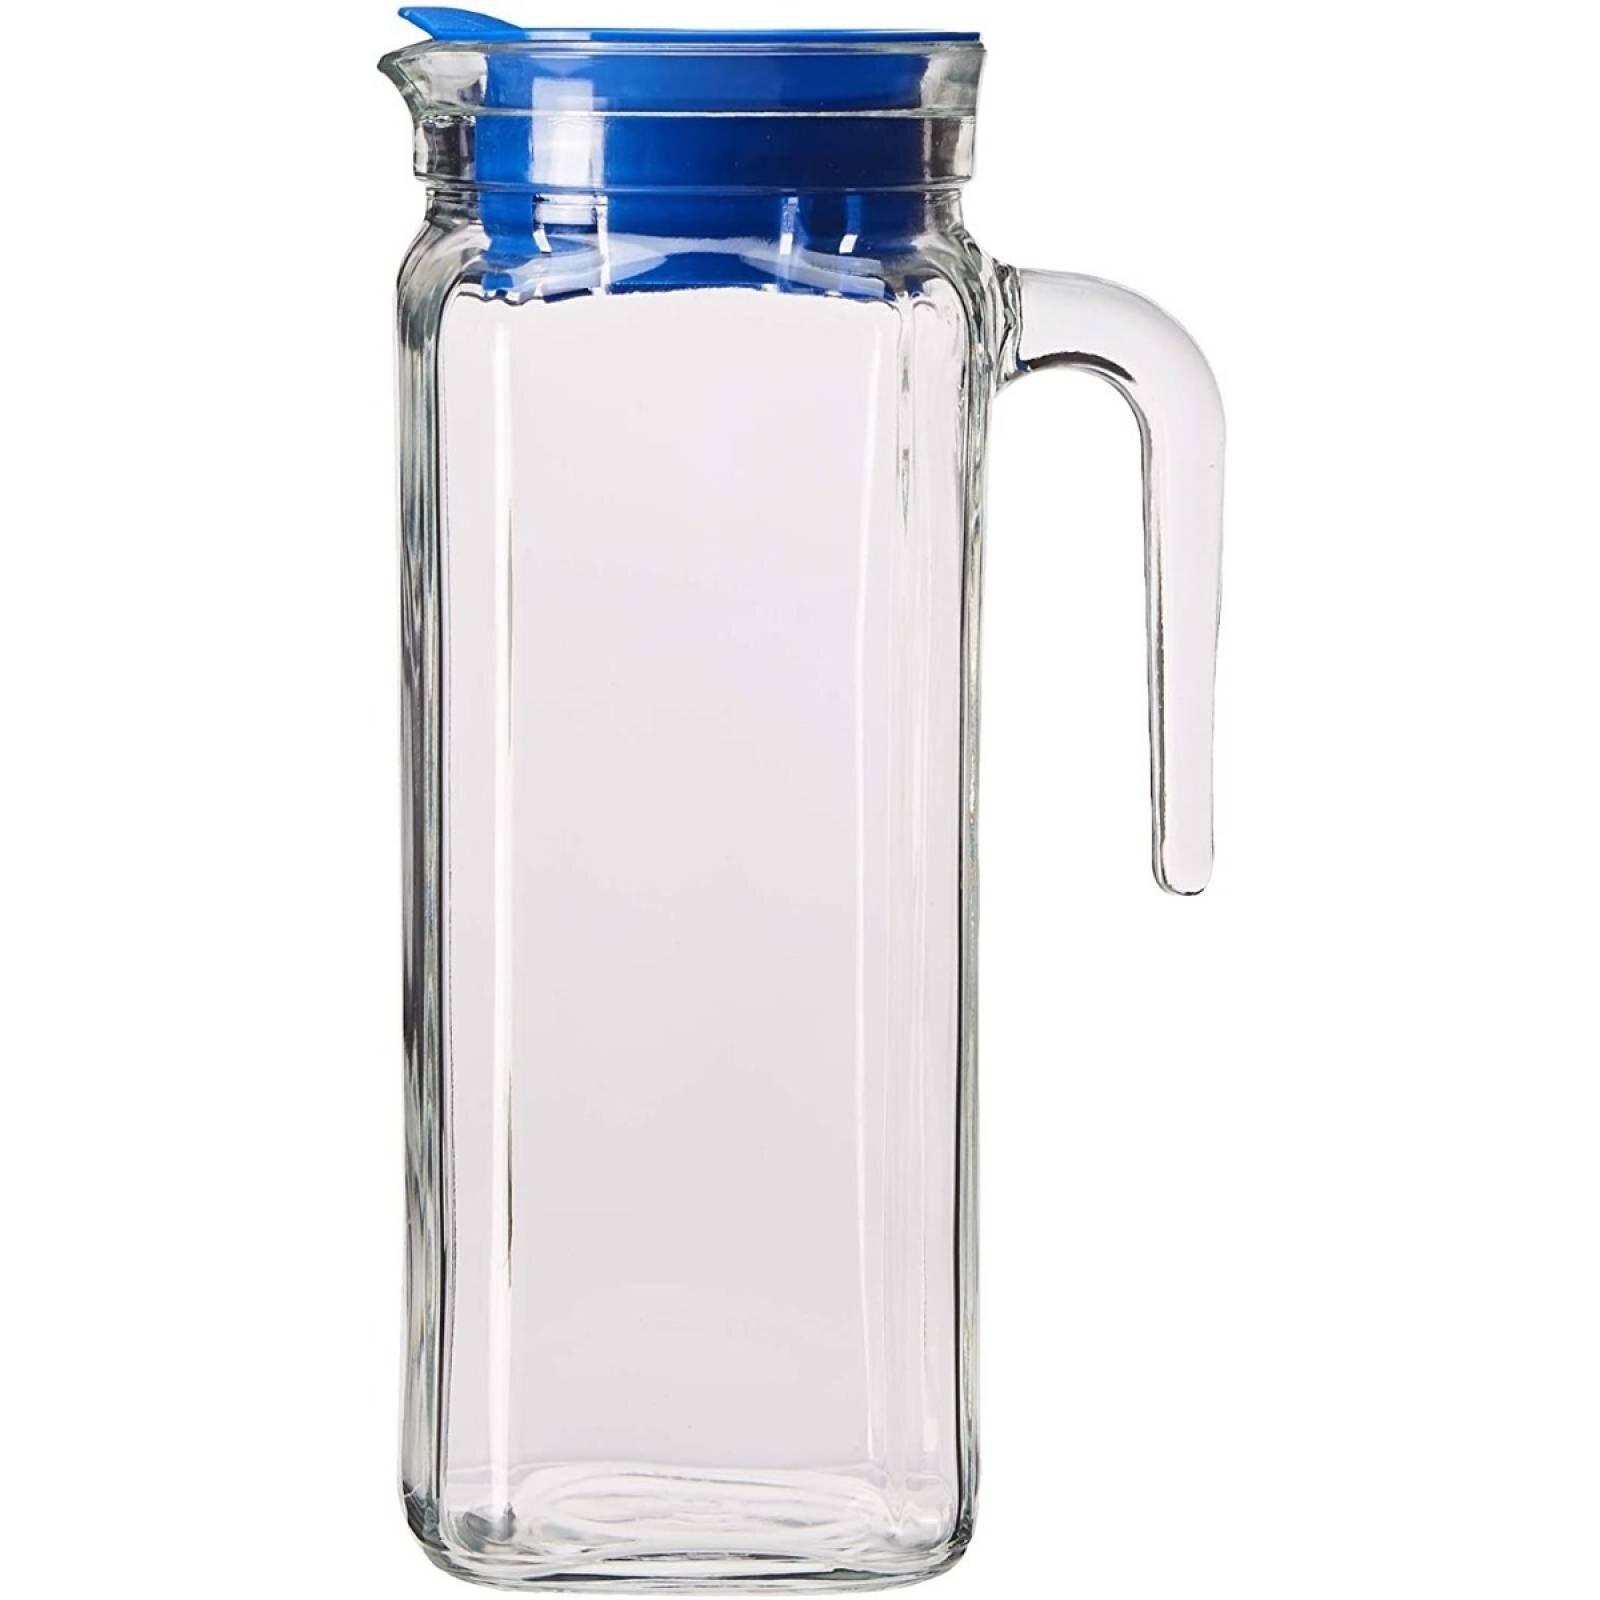 Jarra de leche japonesa jarra de vidrio jarra de agua jarra de agua para leche crema salsa té café vino jugo jarra 300 ml/550 ml 300 ml, azul 